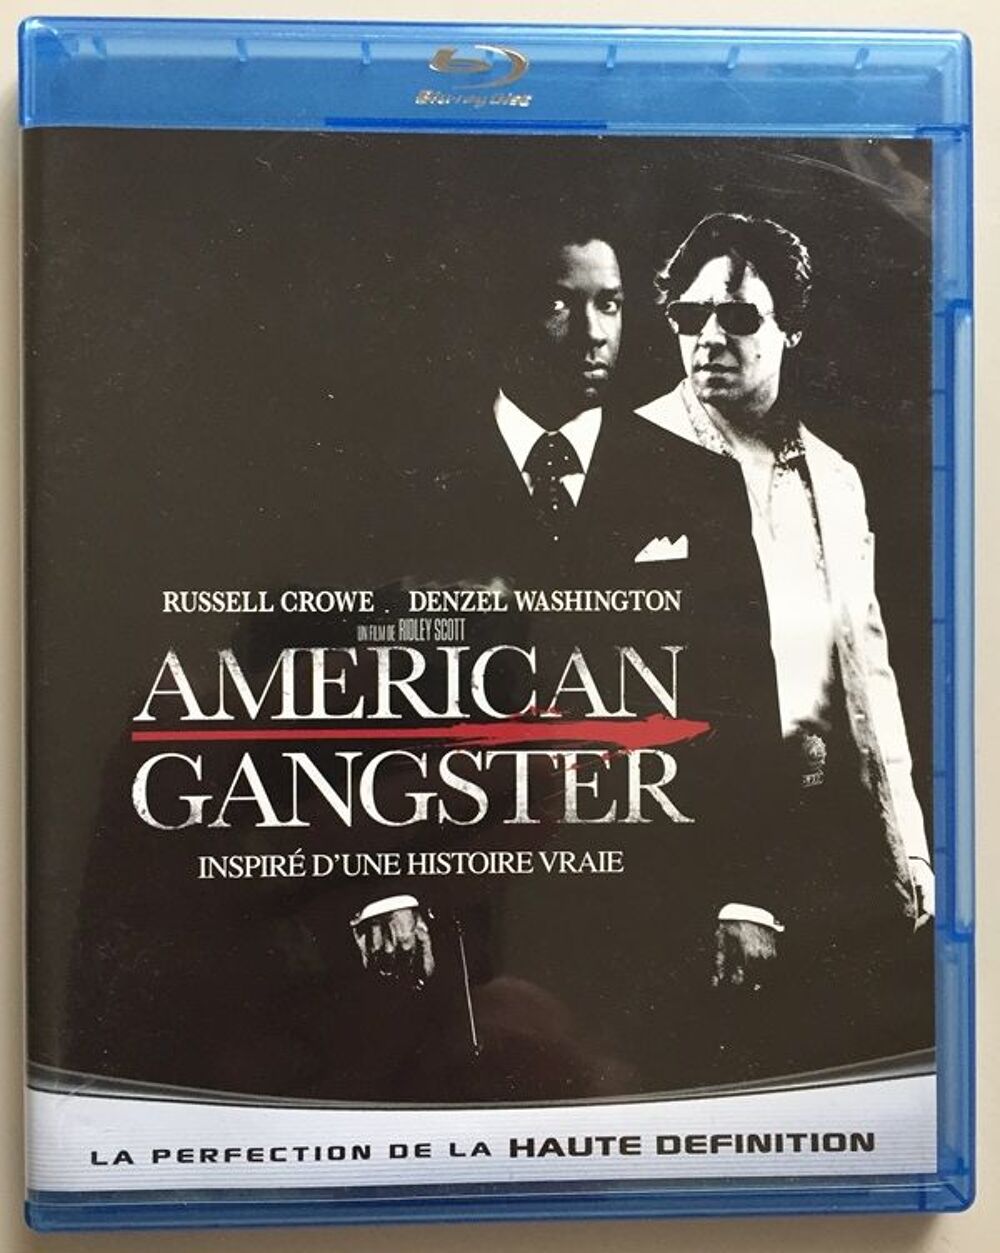 Blu-ray (bluray / DVD) American Gangster DVD et blu-ray